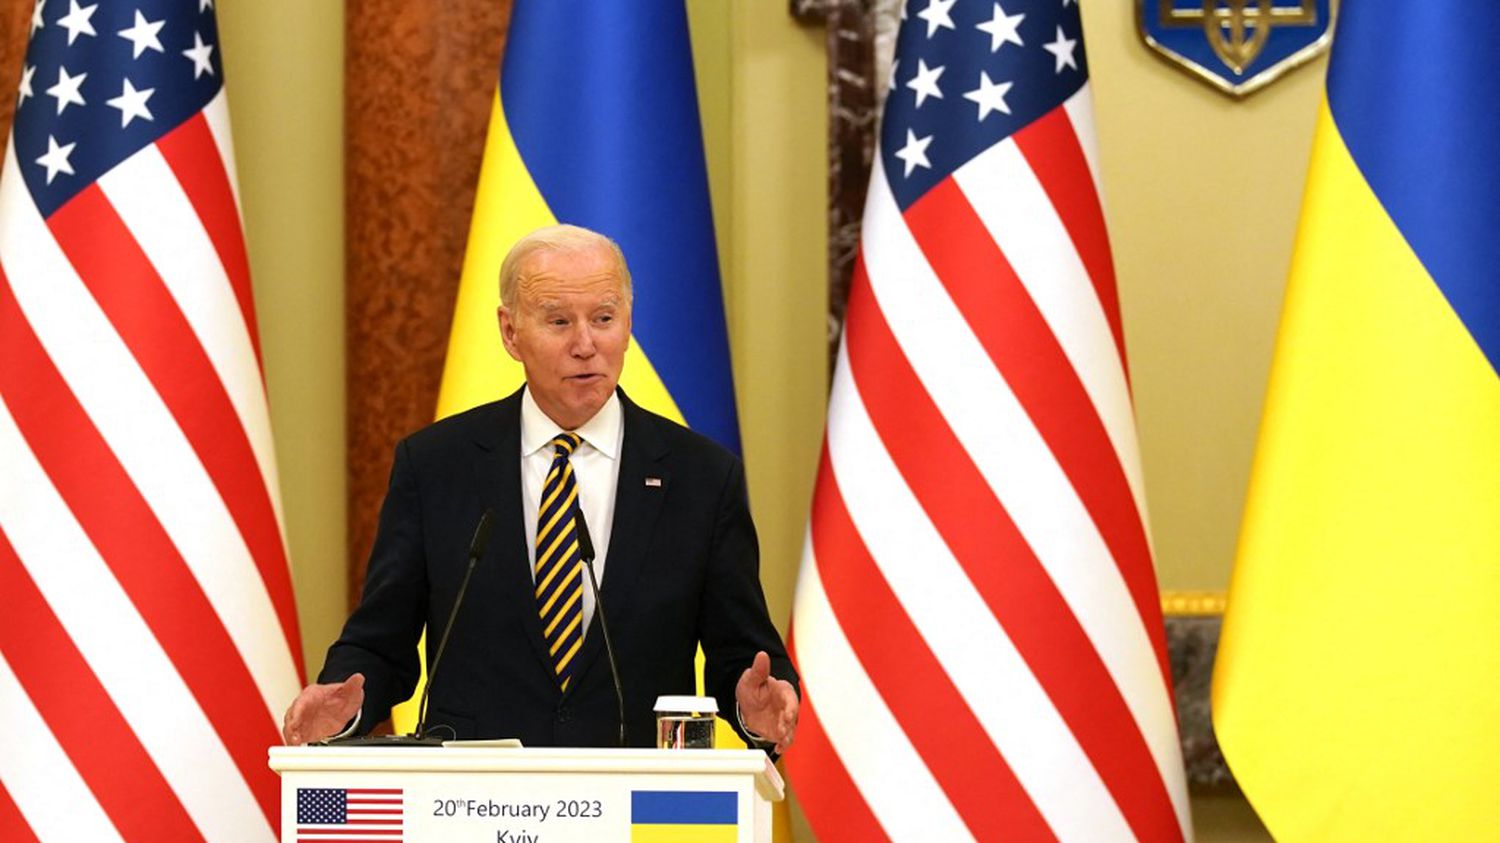 War in Ukraine: visiting kyiv, Joe Biden announces $500 million in additional military aid
